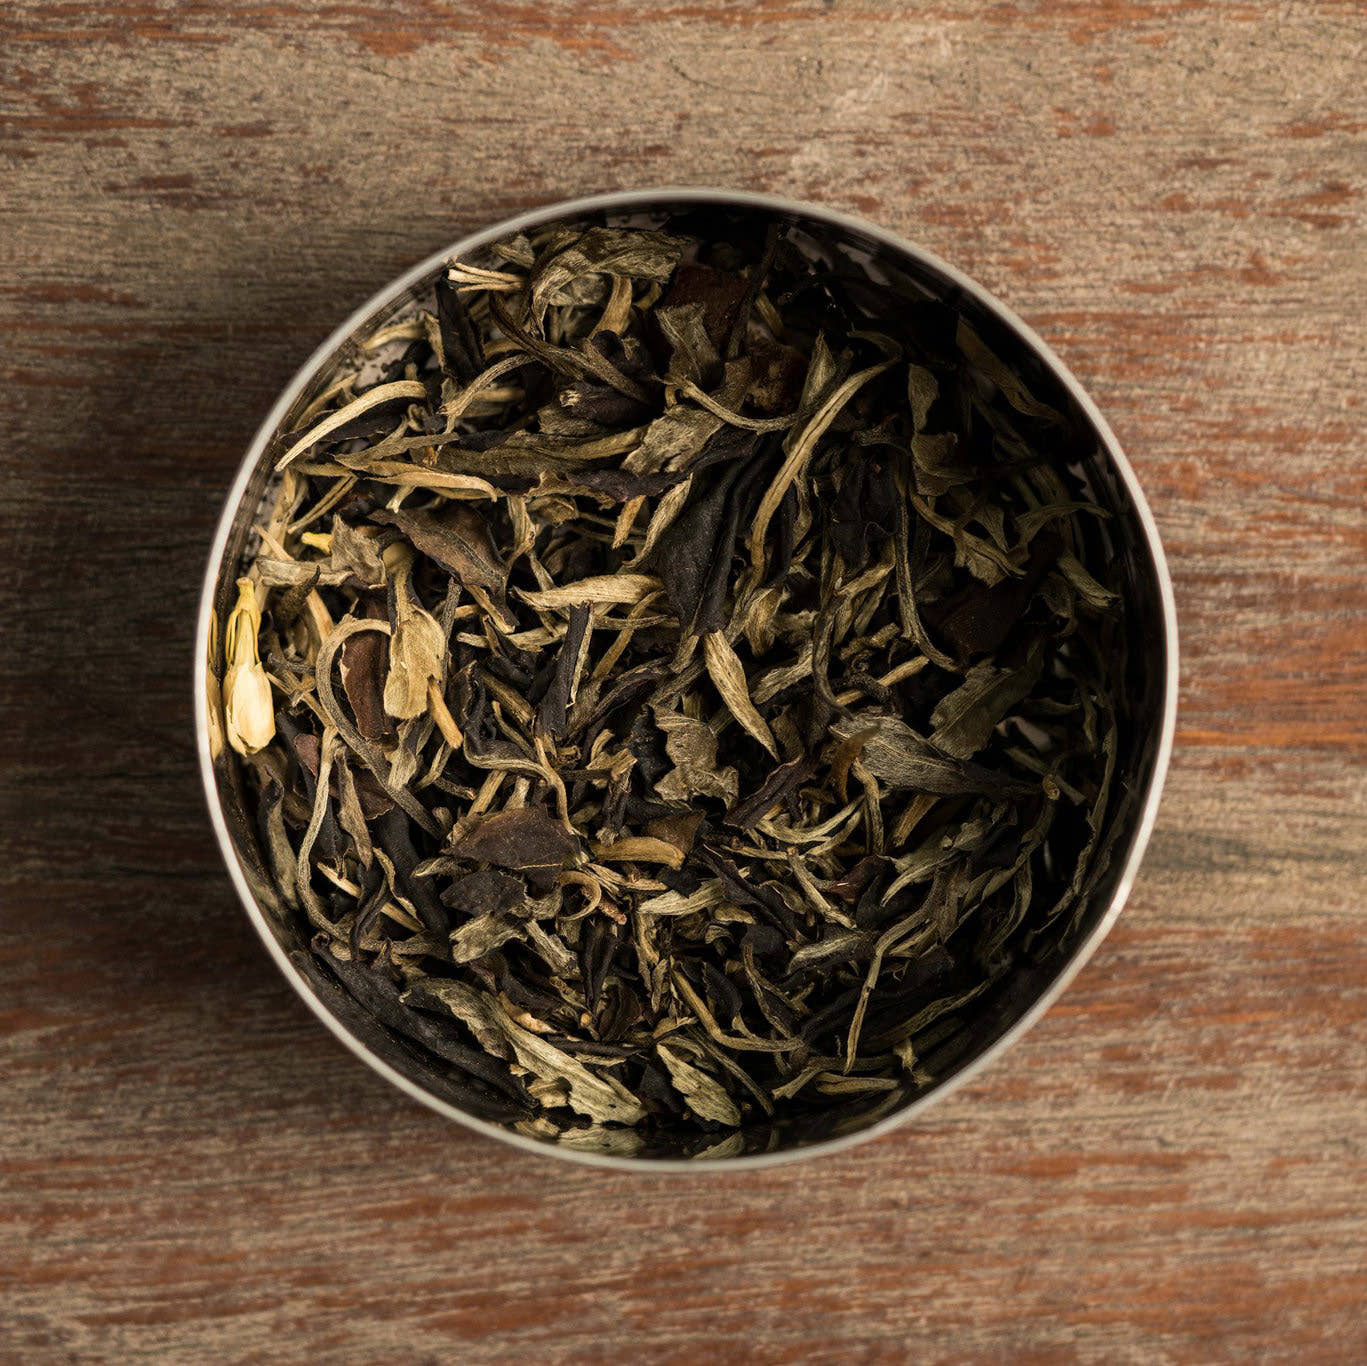 Tropical White loose leaf tea by Monsoon Tea